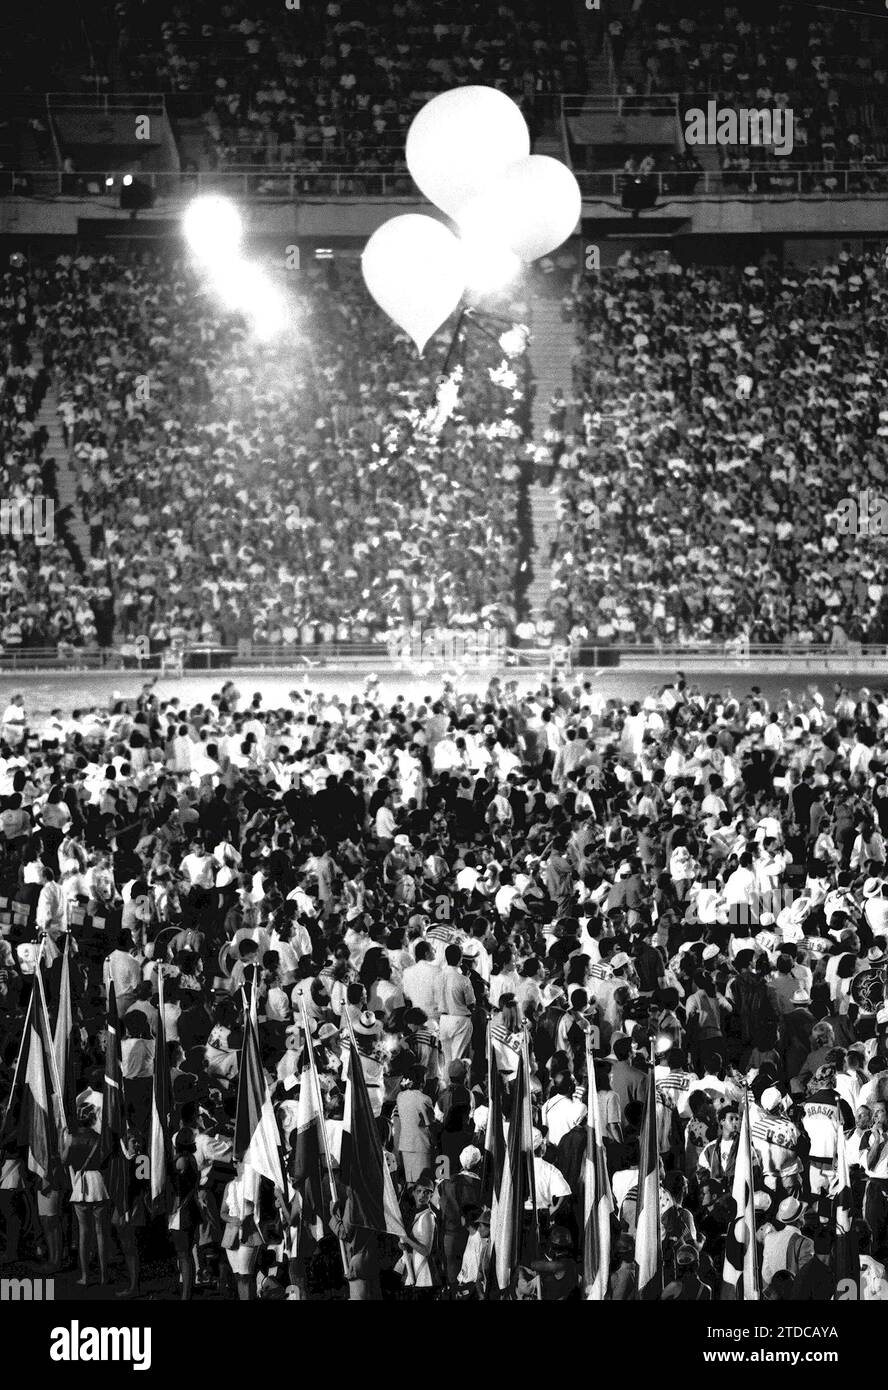 Barcelona..September 1992..Paralympic Games...Photo Jordi Romeu...Archdc..Closing ceremony. Credit: Album / Archivo ABC / Jordi Romeu Stock Photo